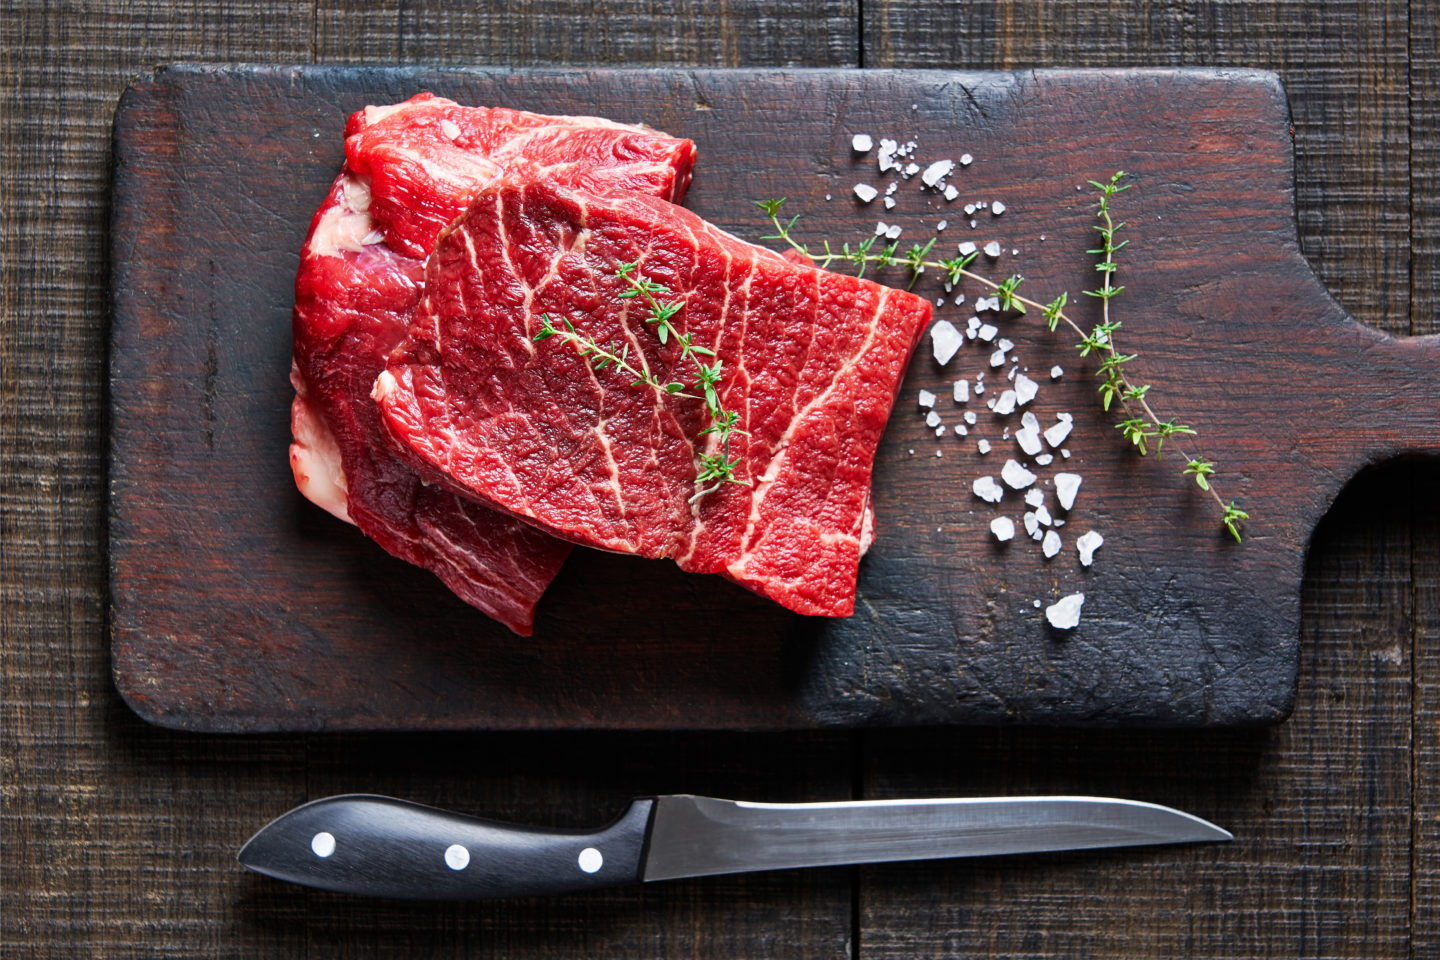 uncooked flat iron steak on cutting board